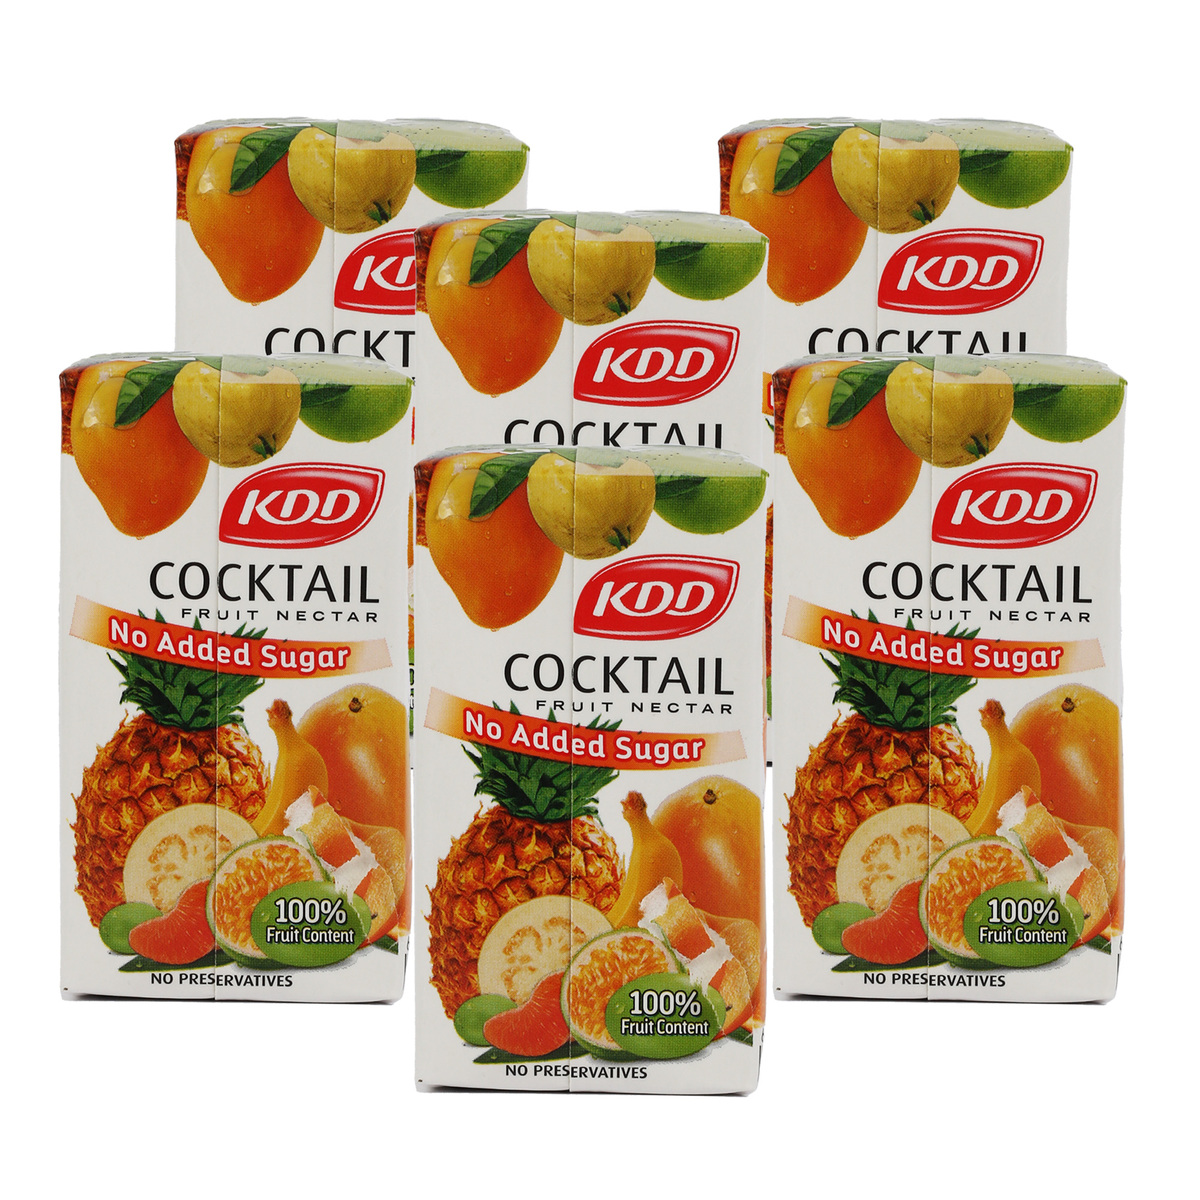 KDD Cocktail Fruit Nectar No Added Sugar 125ml